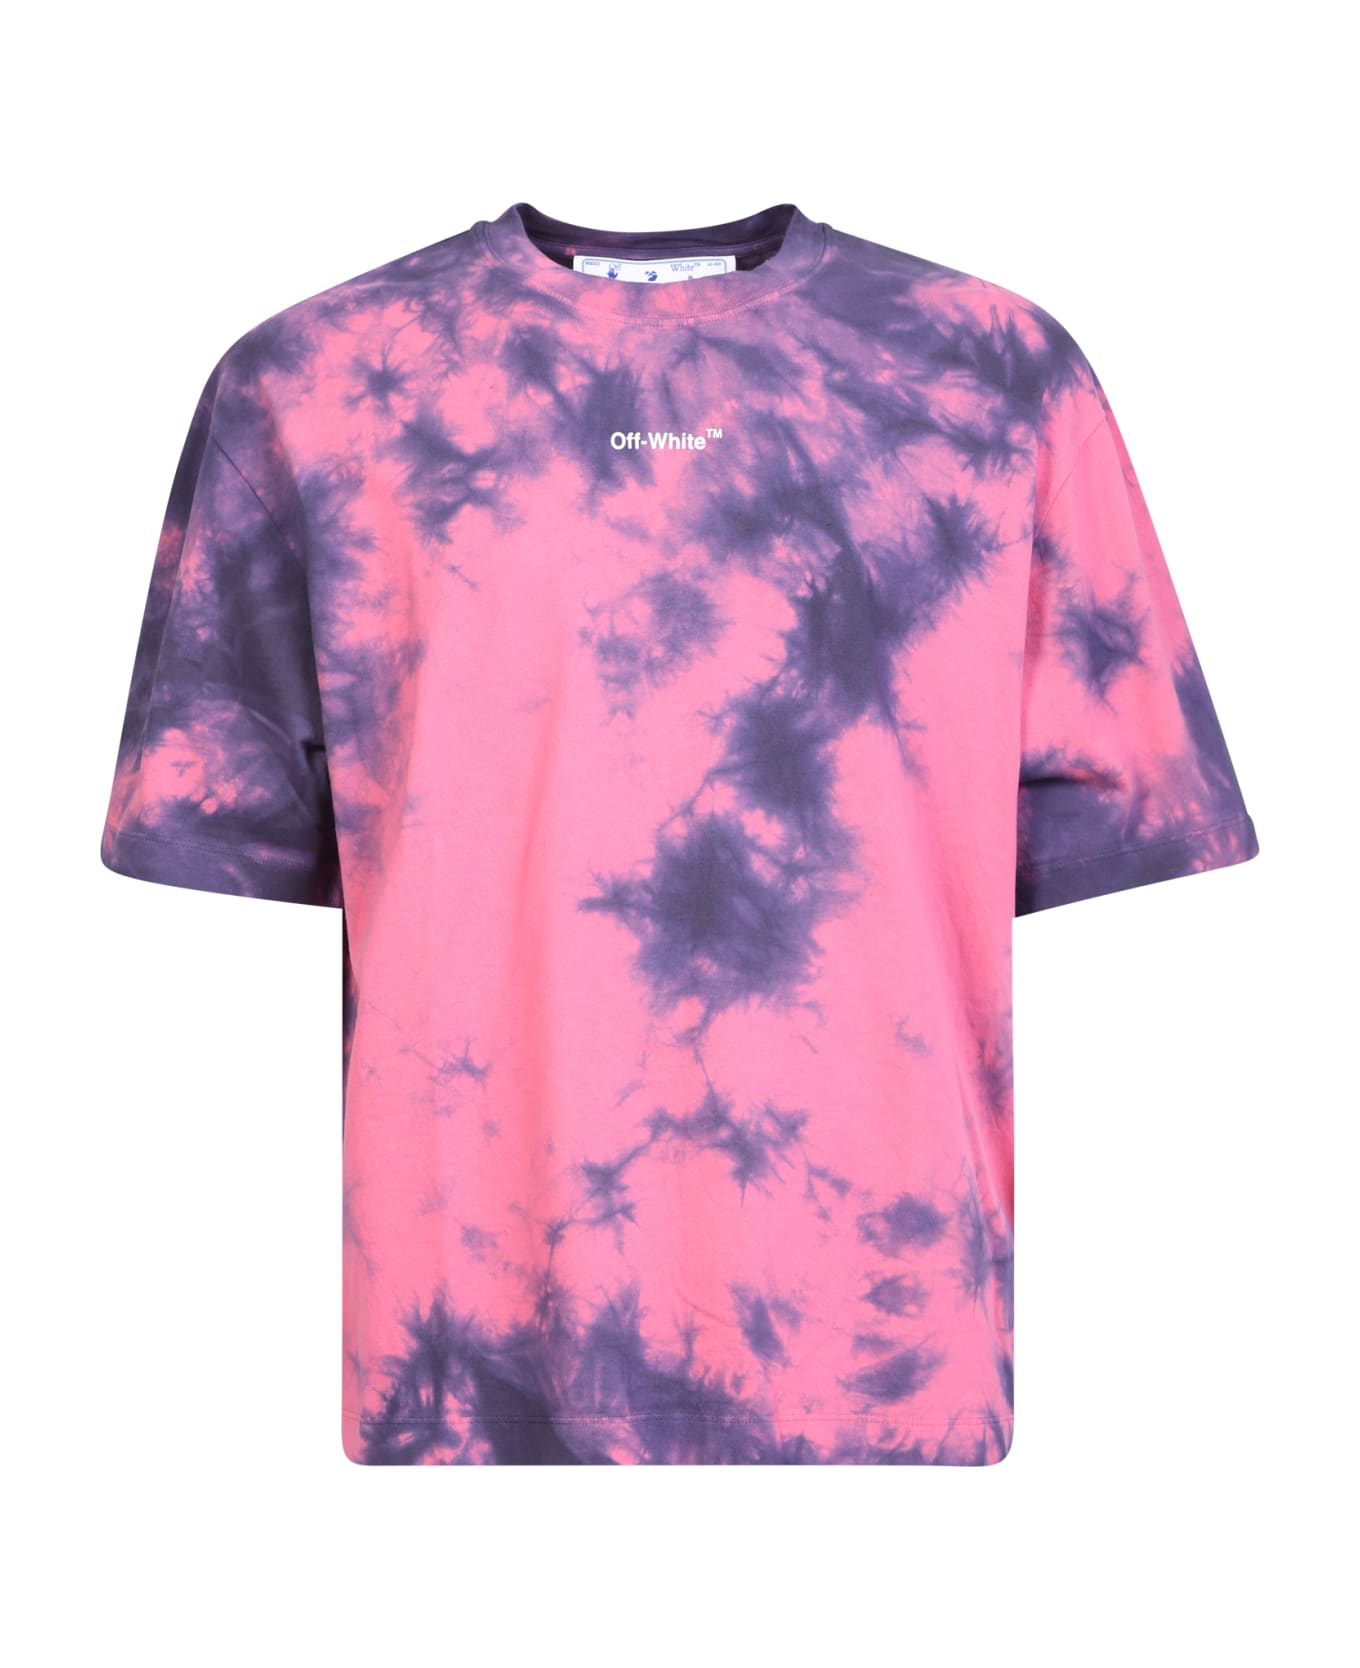 Off-White Arrow Motif And Tie Dye Pattern T-shirt - Pink